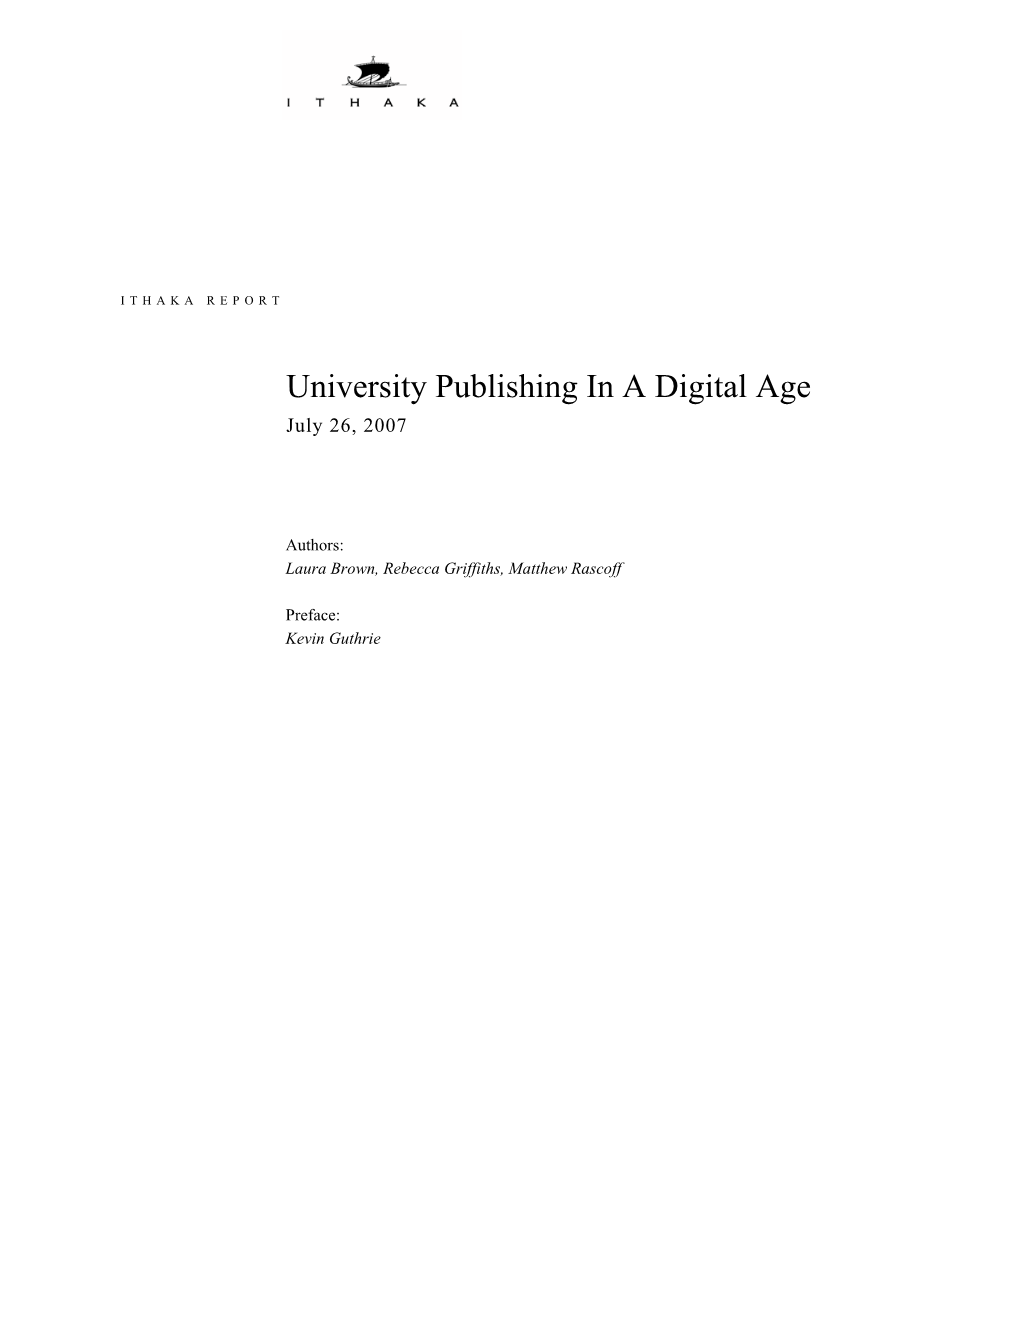 University Publishing in a Digital Age July 26, 2007